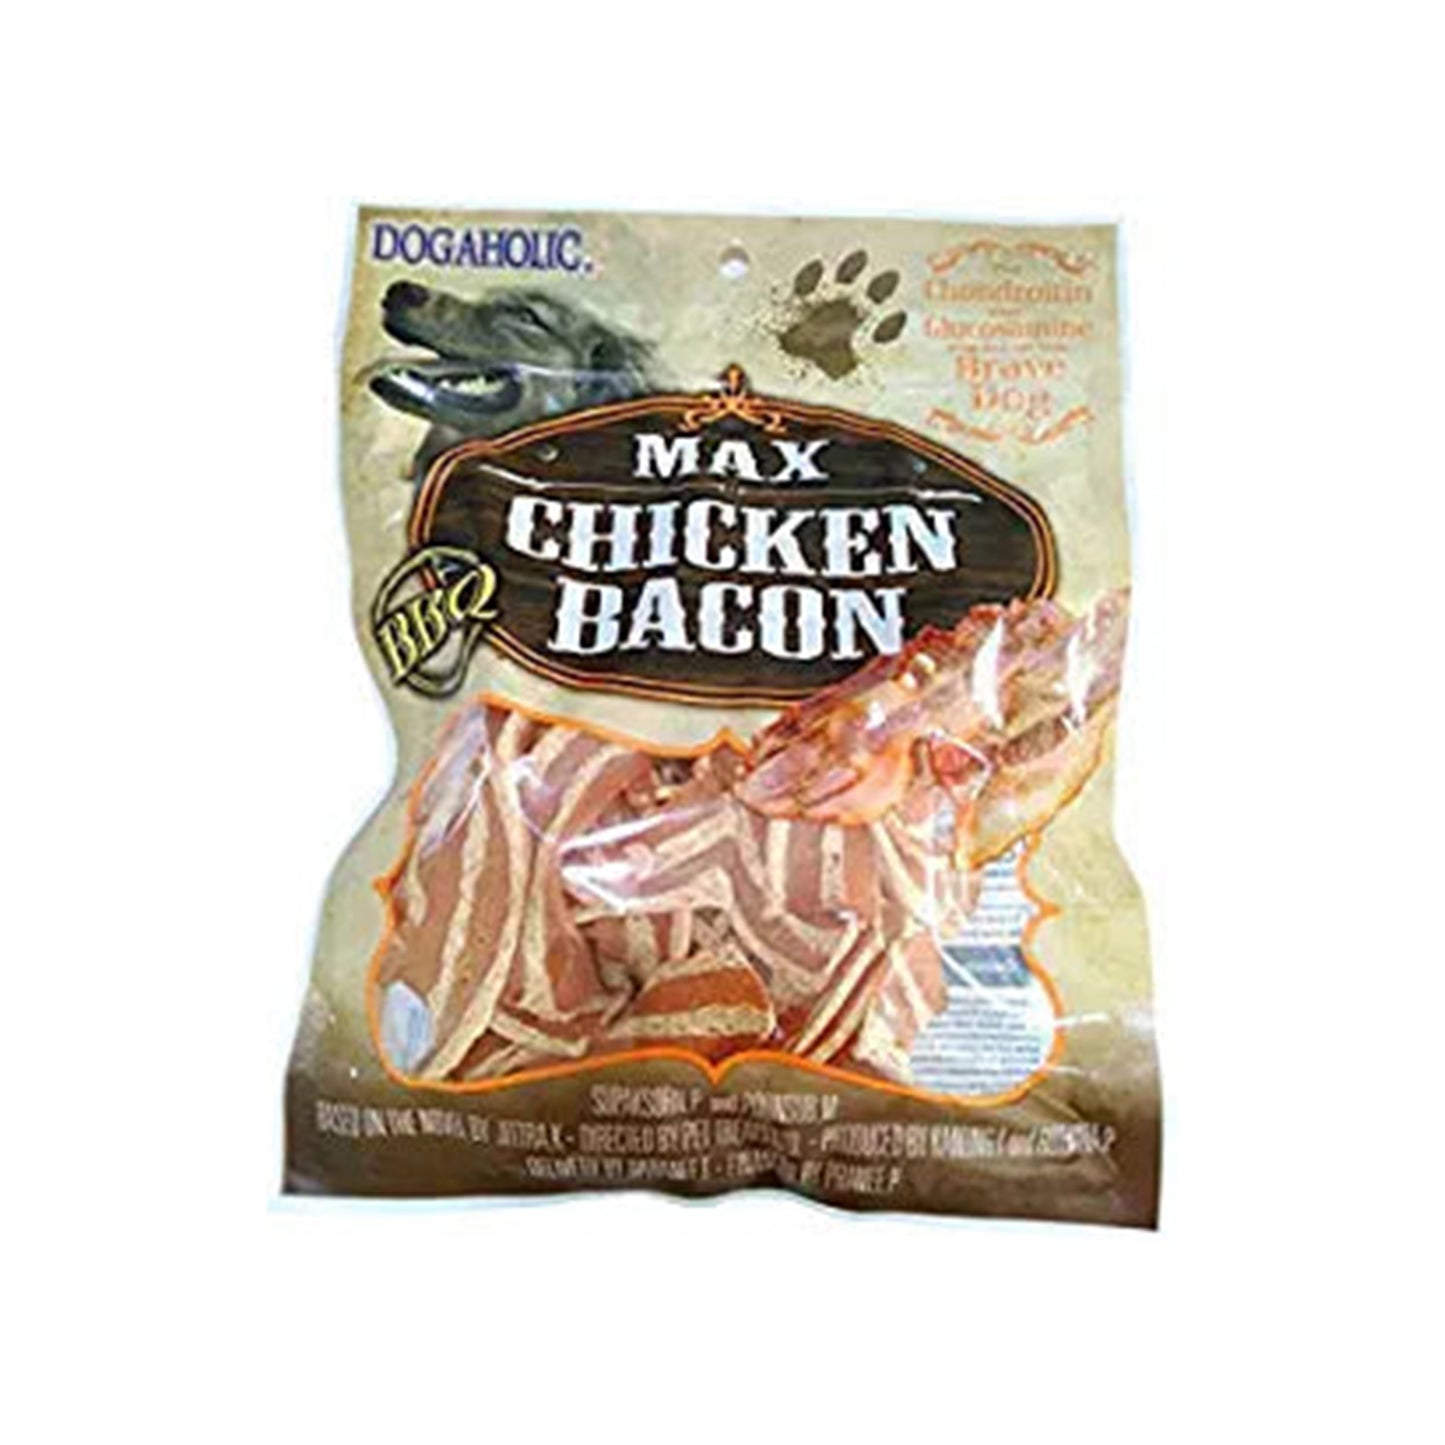 Dogaholic - Max Chicken Bacon Strips BBQ